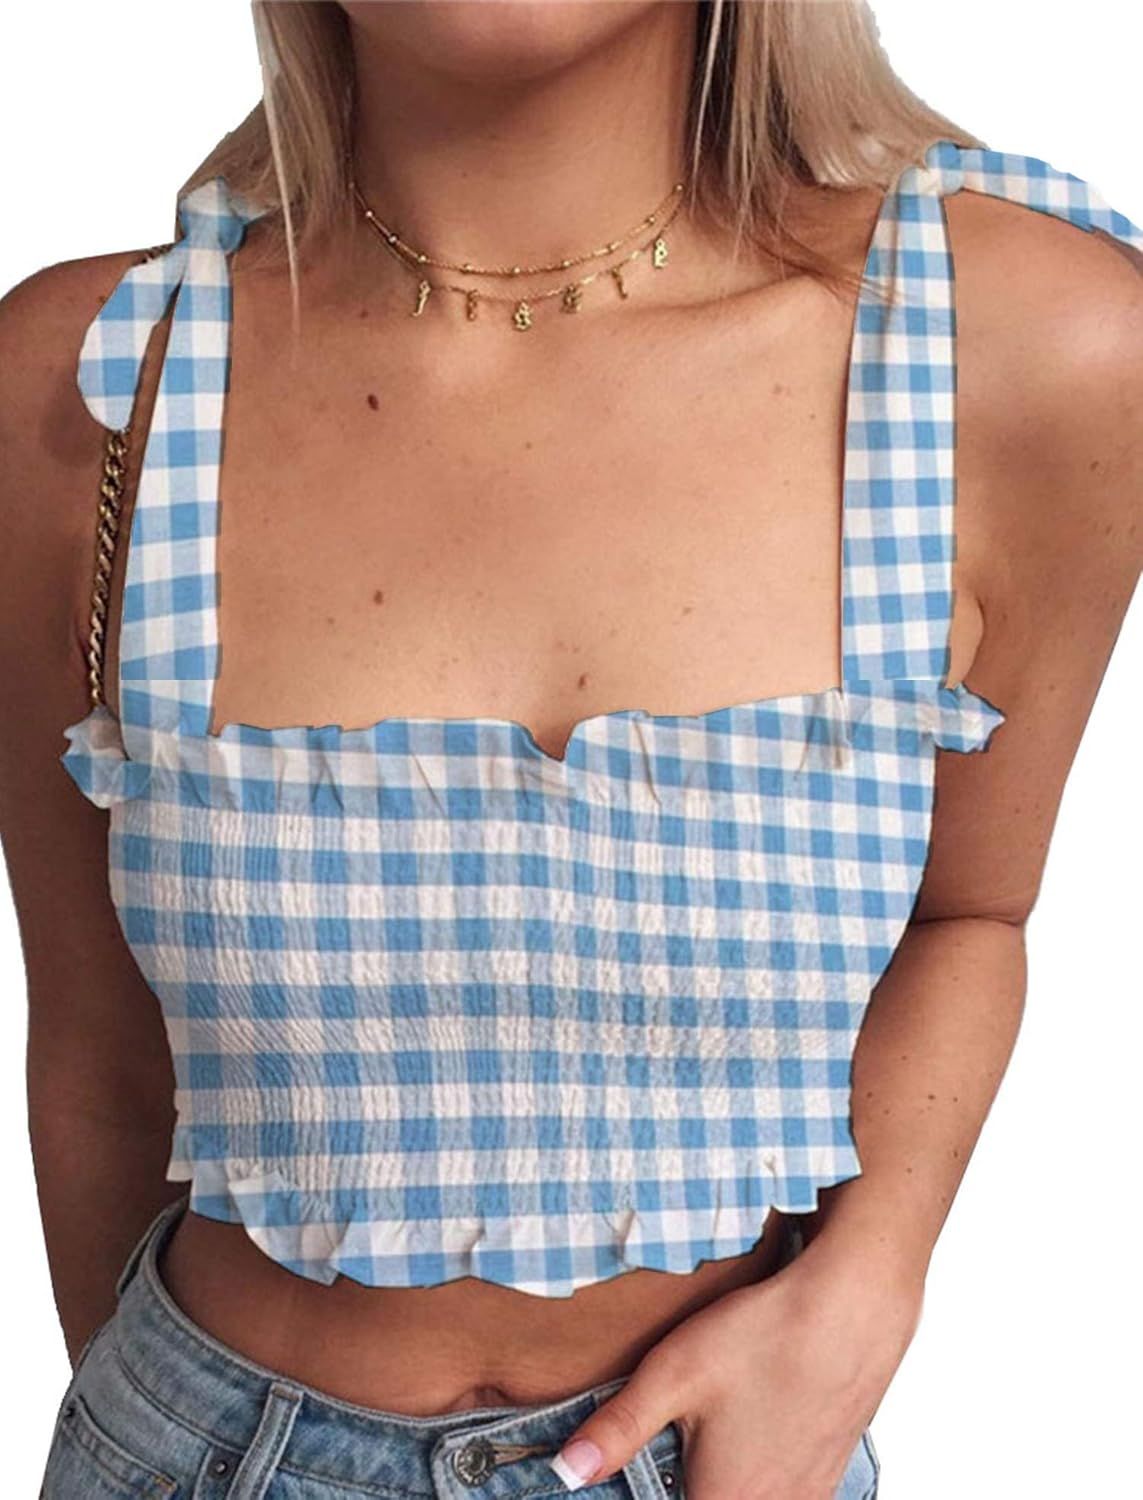 KAMISSY Women's Frill Smocked Crop Tank Top Tie Shoulder Strap Vest | Amazon (US)